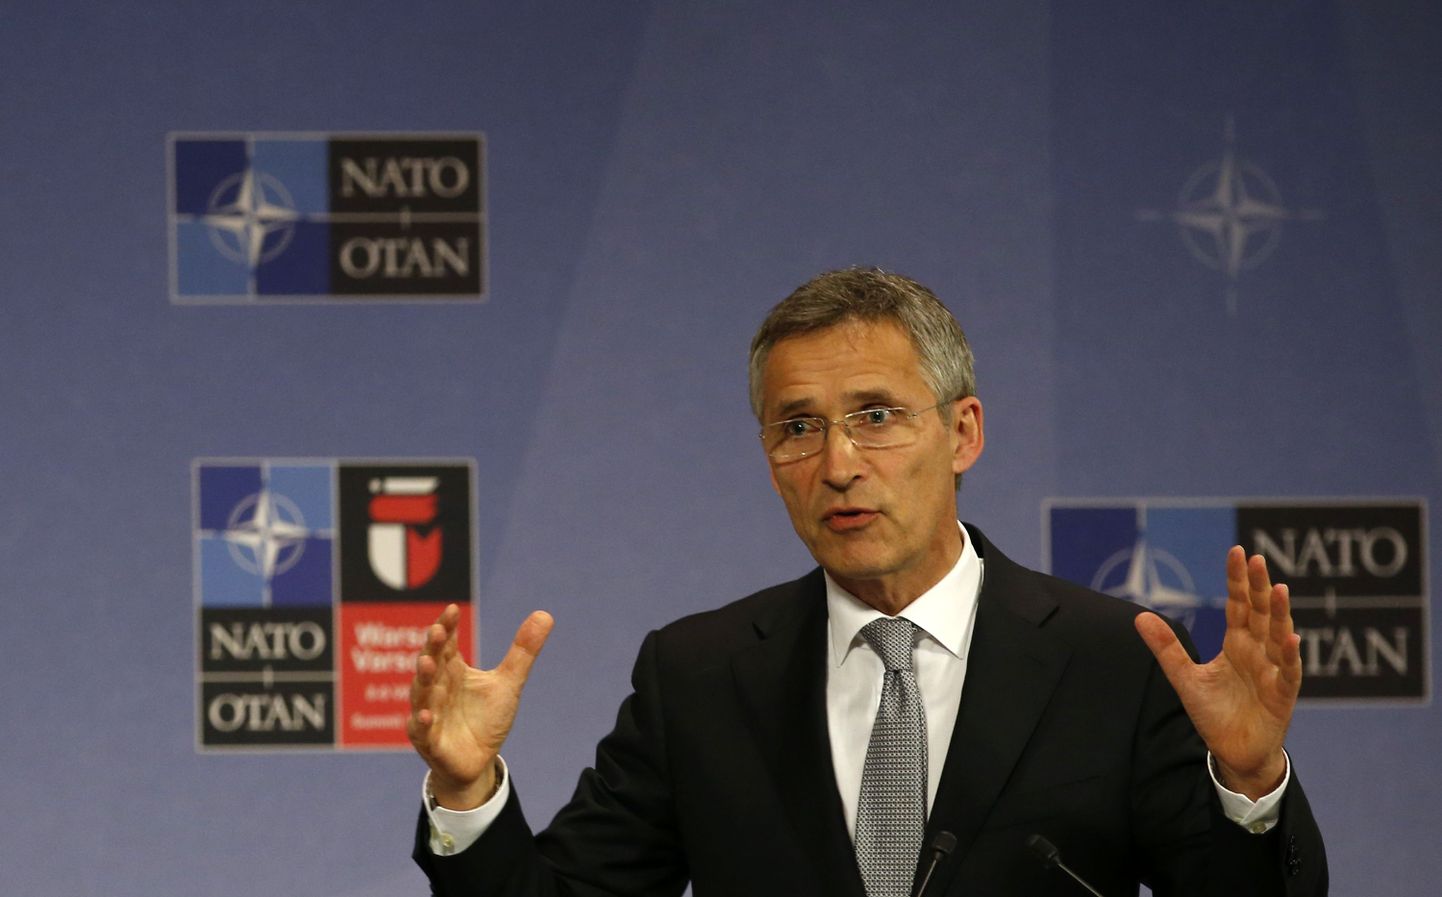 NATO peasekretät Jens Stoltenberg brüsselis kõnet pidamas